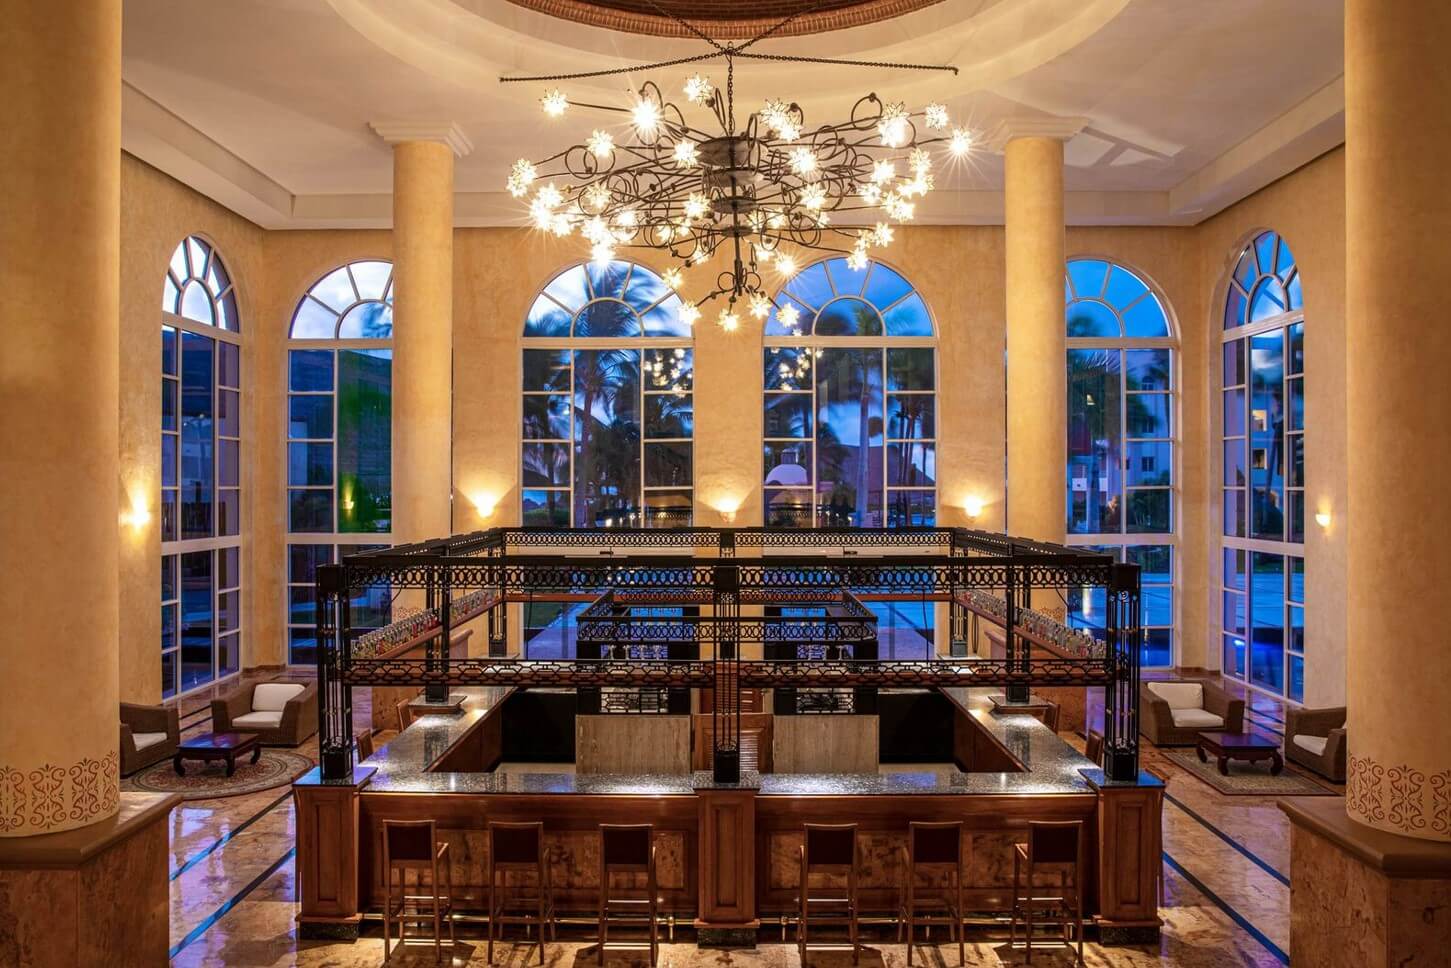 Lobby bar with big windows and stars chandeliers